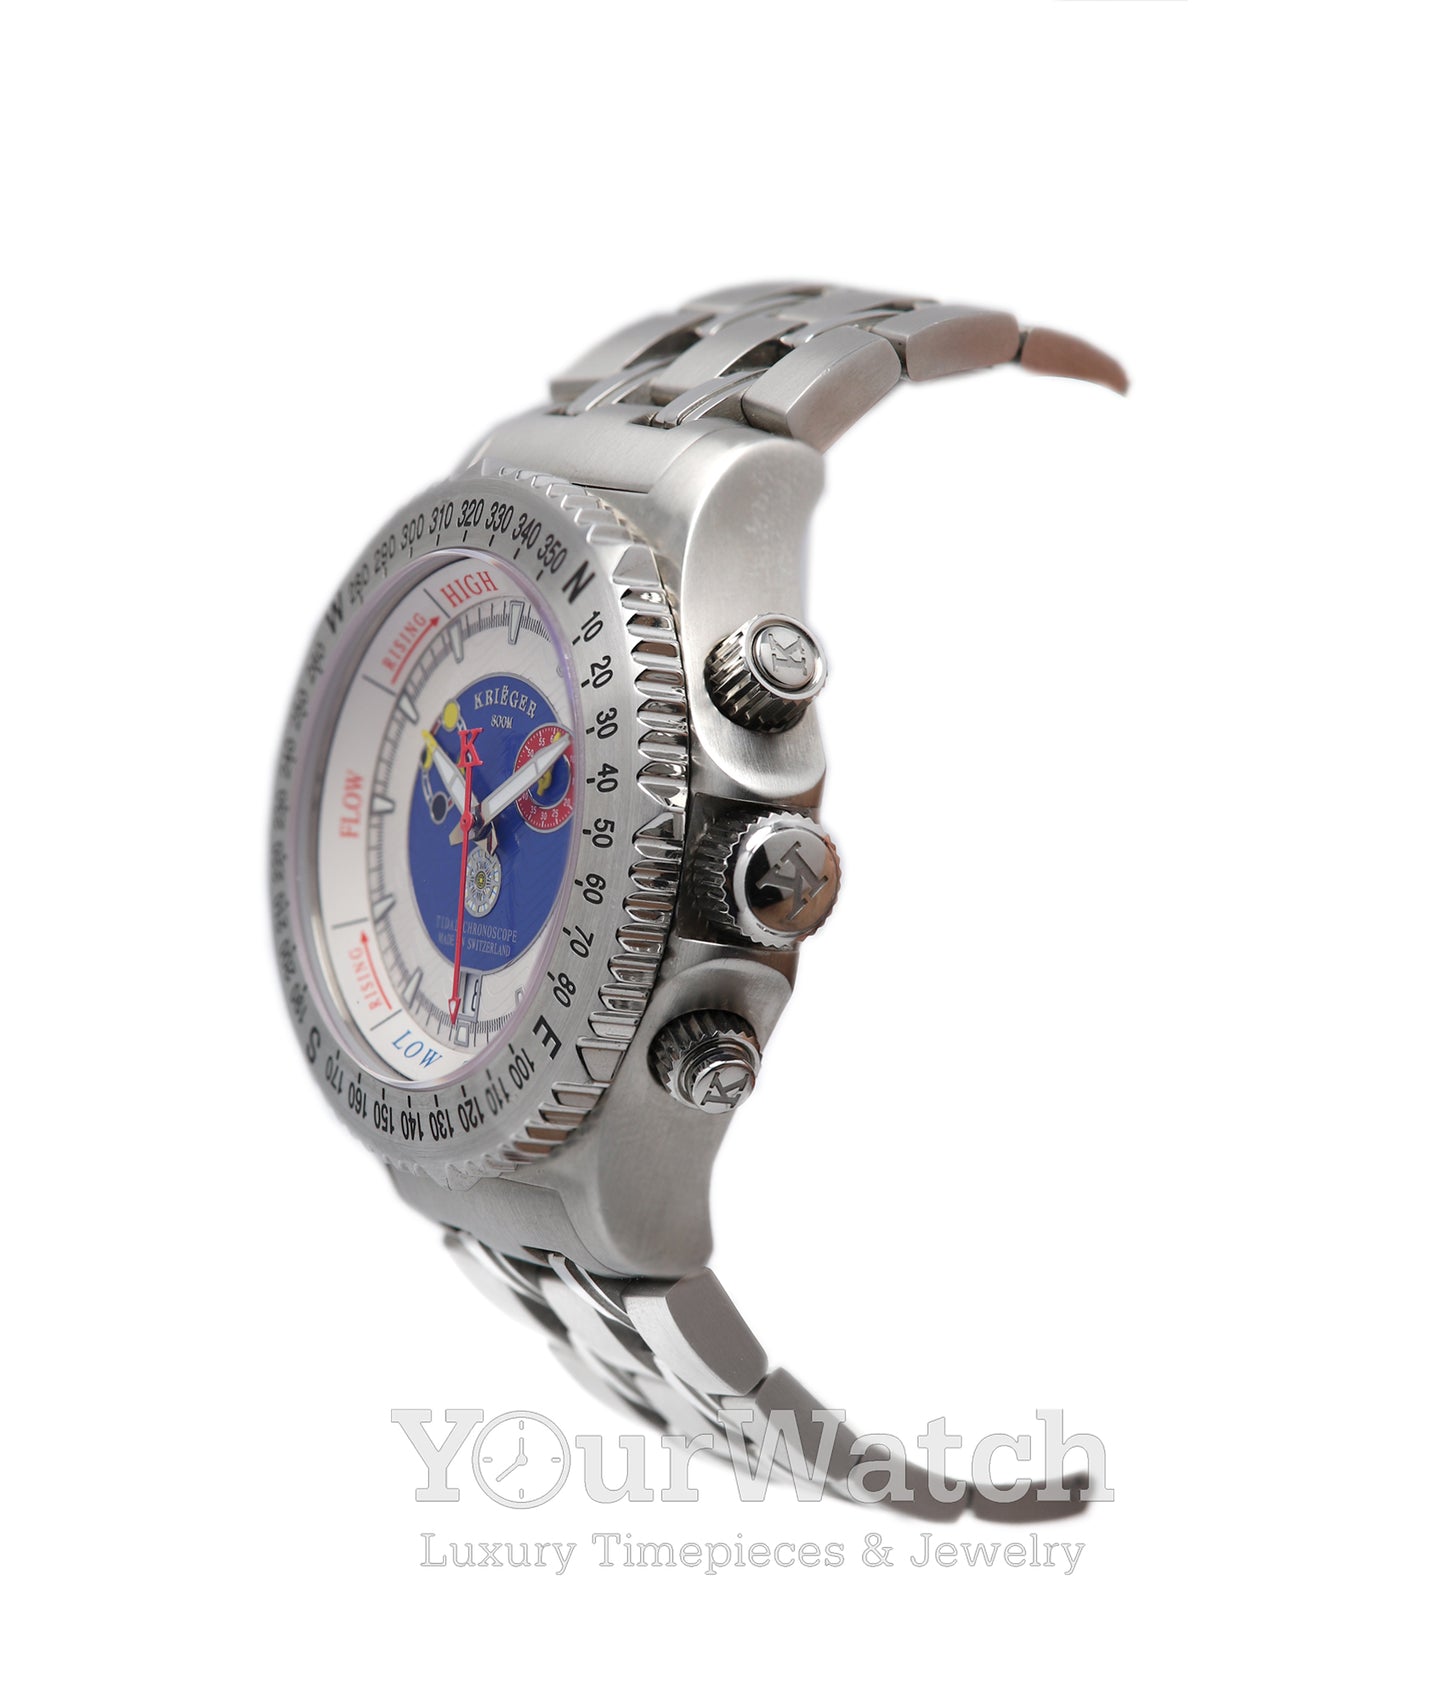 Krieger Tidal Wave Chronoscope Watch K1001T.1R.56.